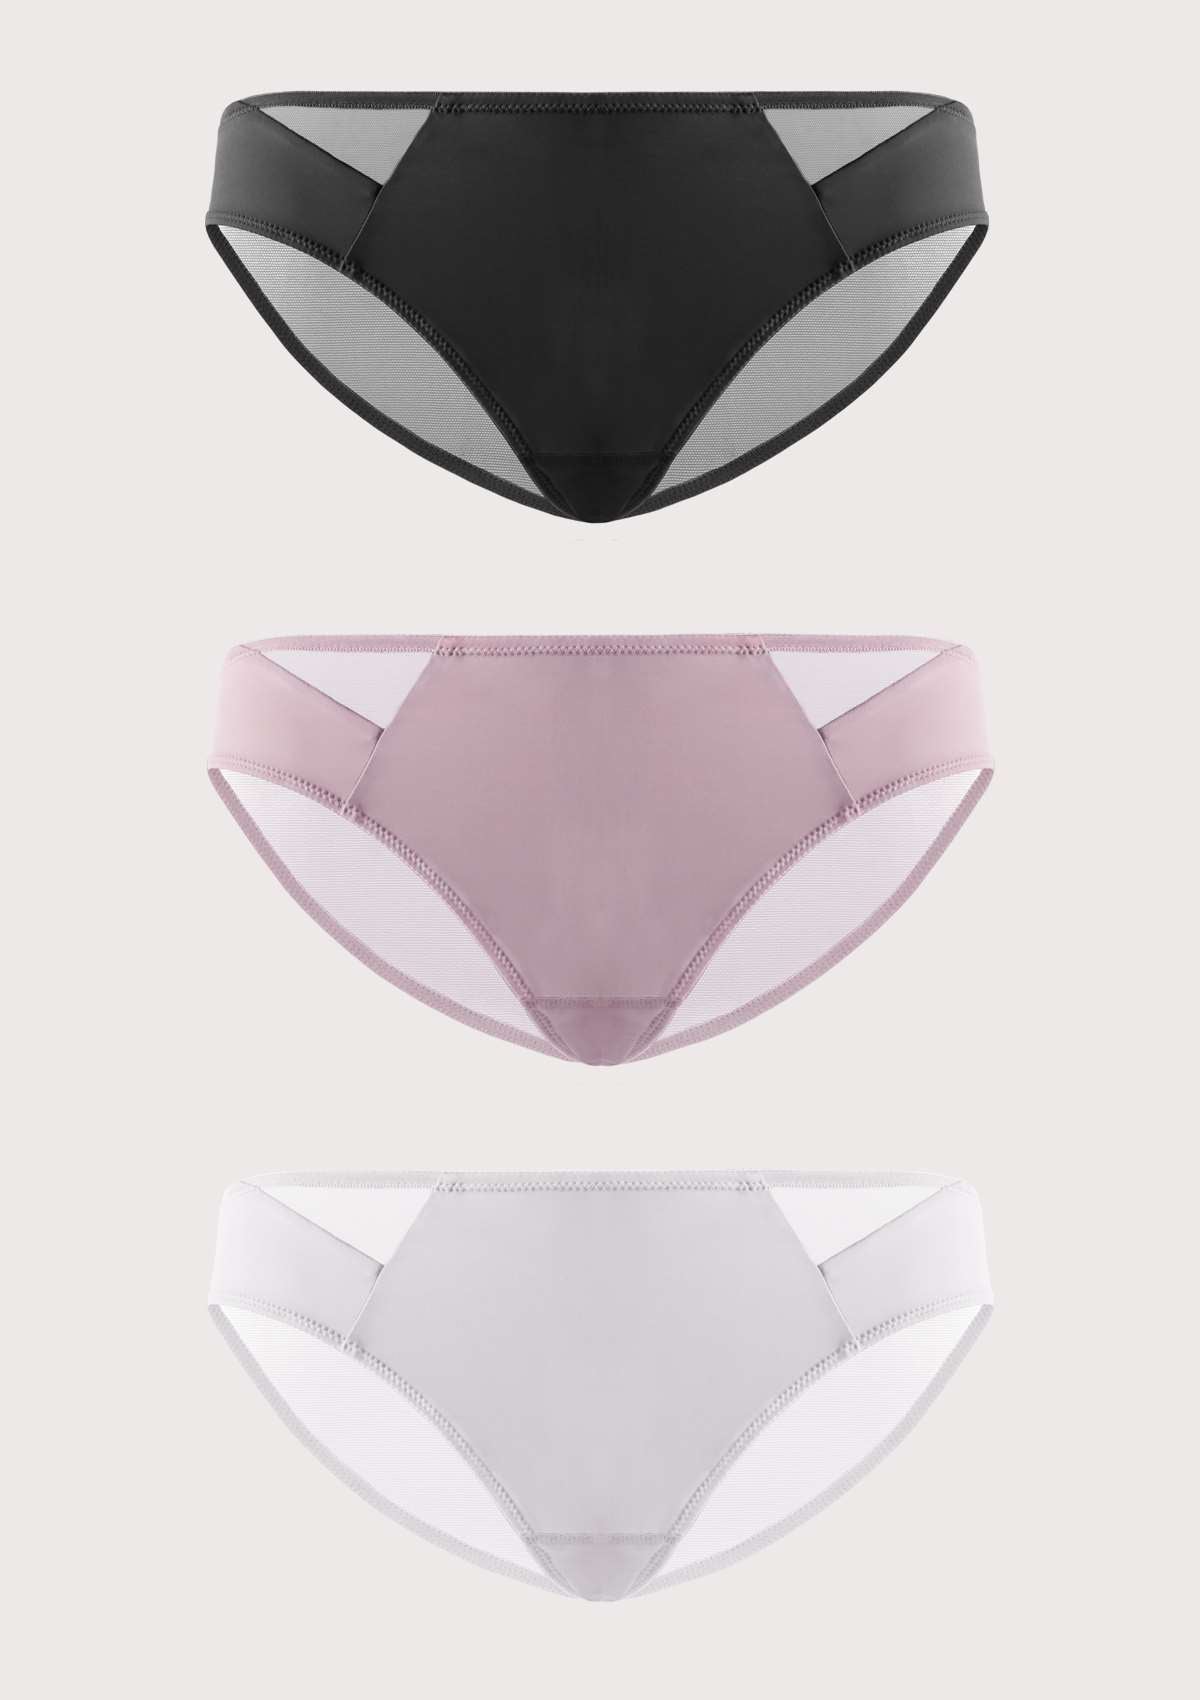 HSIA Geometric Breathable Soft Everyday Bikini Panties 3 Pack - M / Black+Purple+Pink